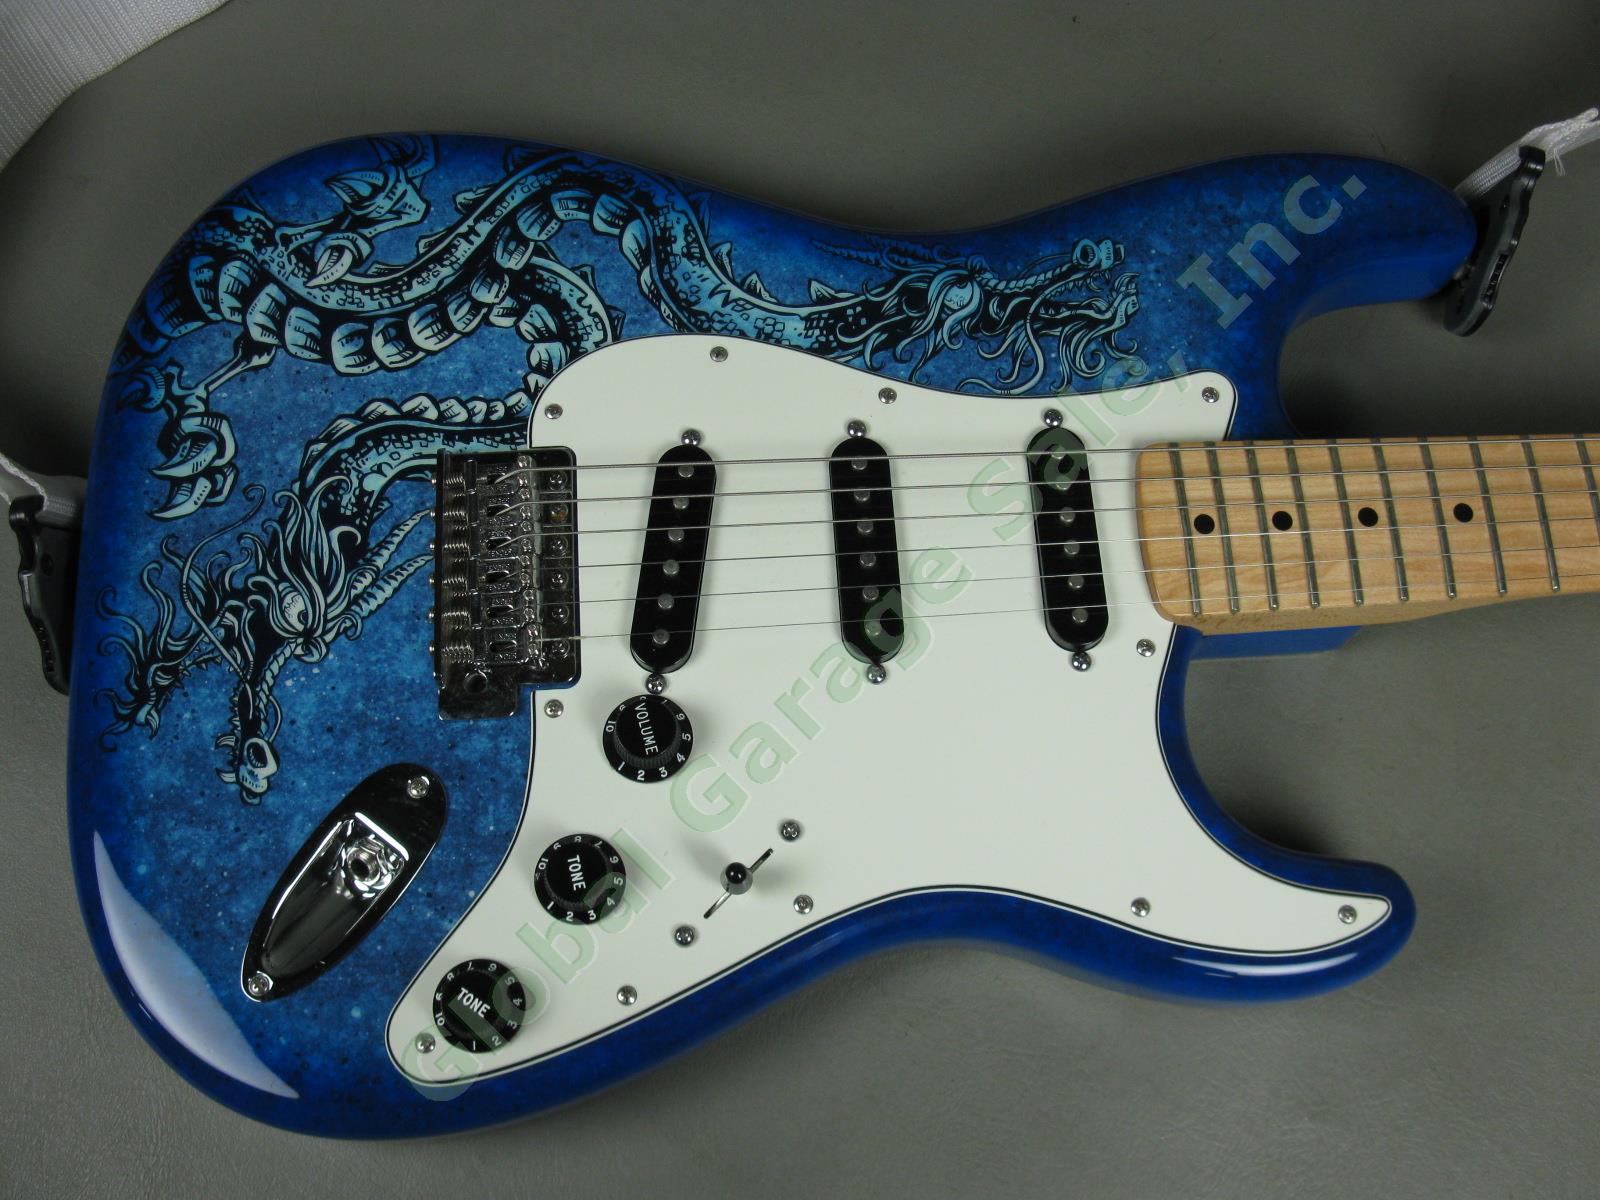 MINT! 2015 Fender David Lozeau Blue Dragon Stratocaster Electric Guitar w/Case 2